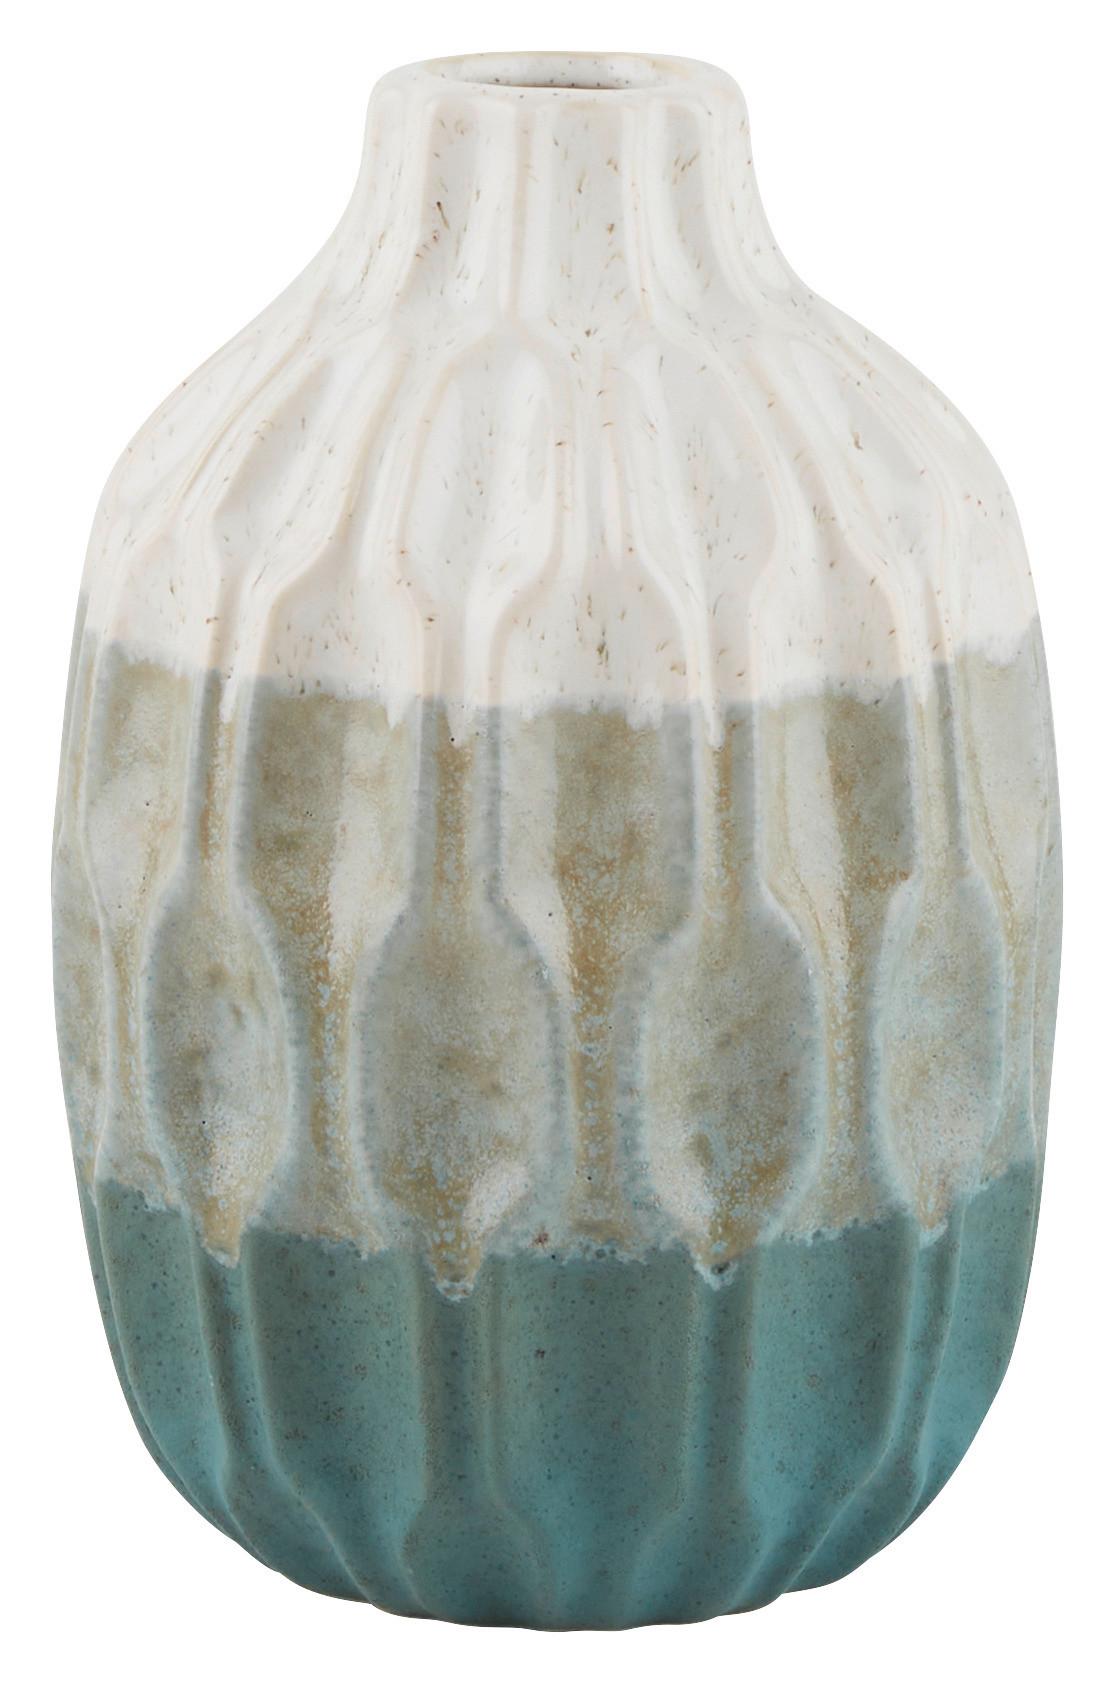 Vaza Inma I -Paz- - krem barve/zelena, Basics, keramika (17/25cm) - Premium Living